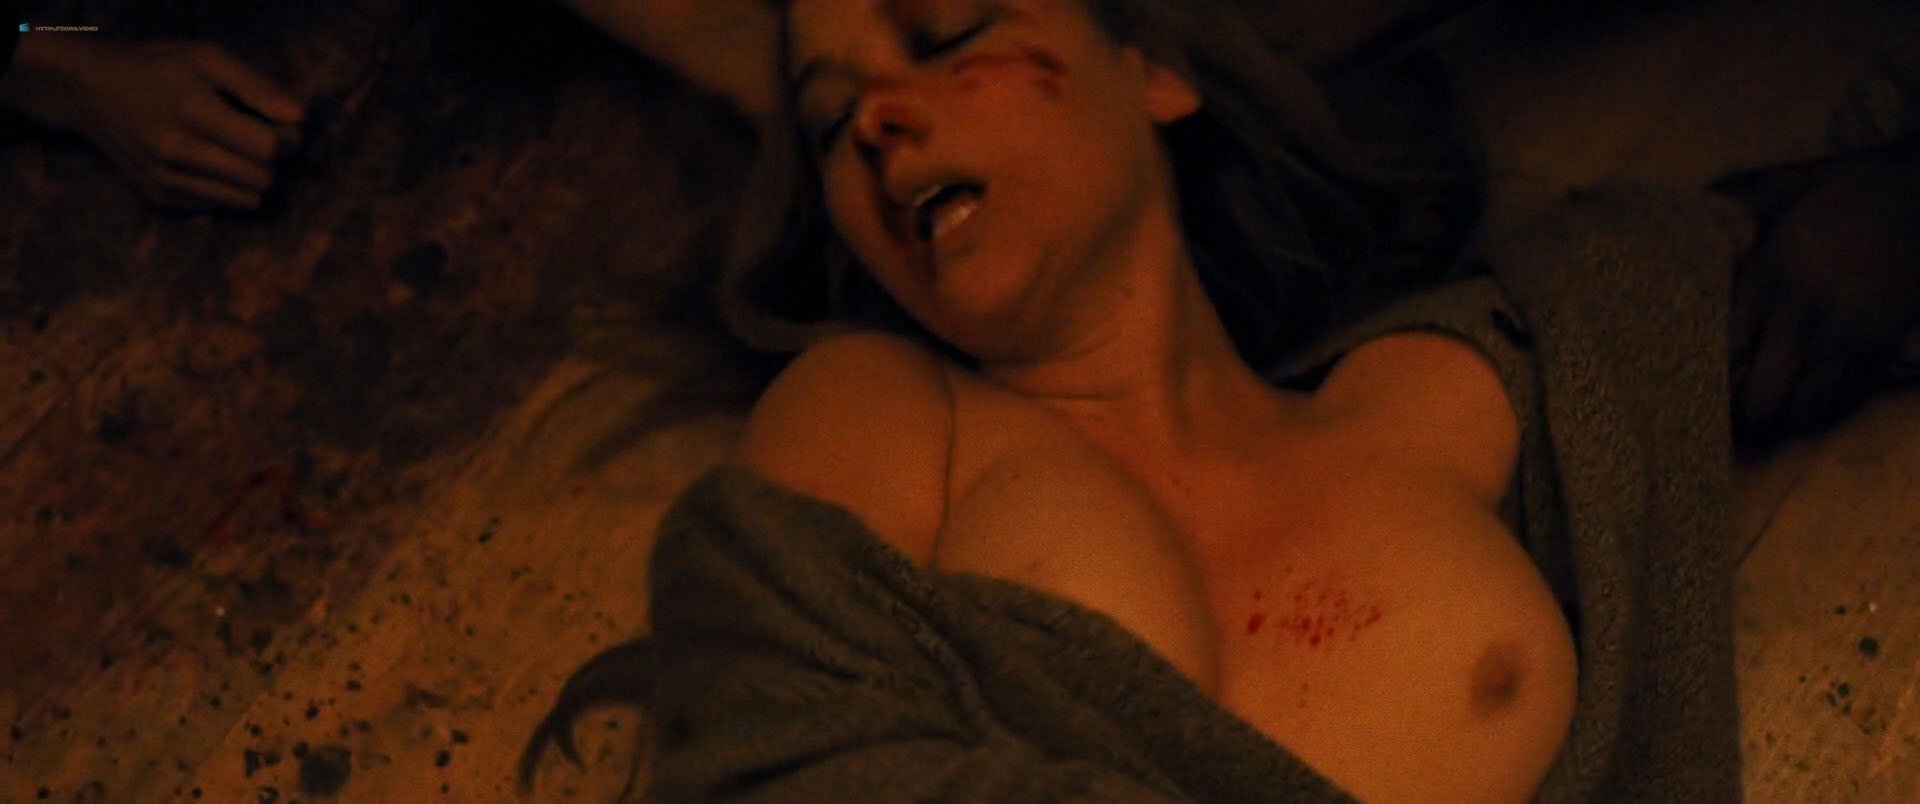 Jennifer lawrence mother nude scene